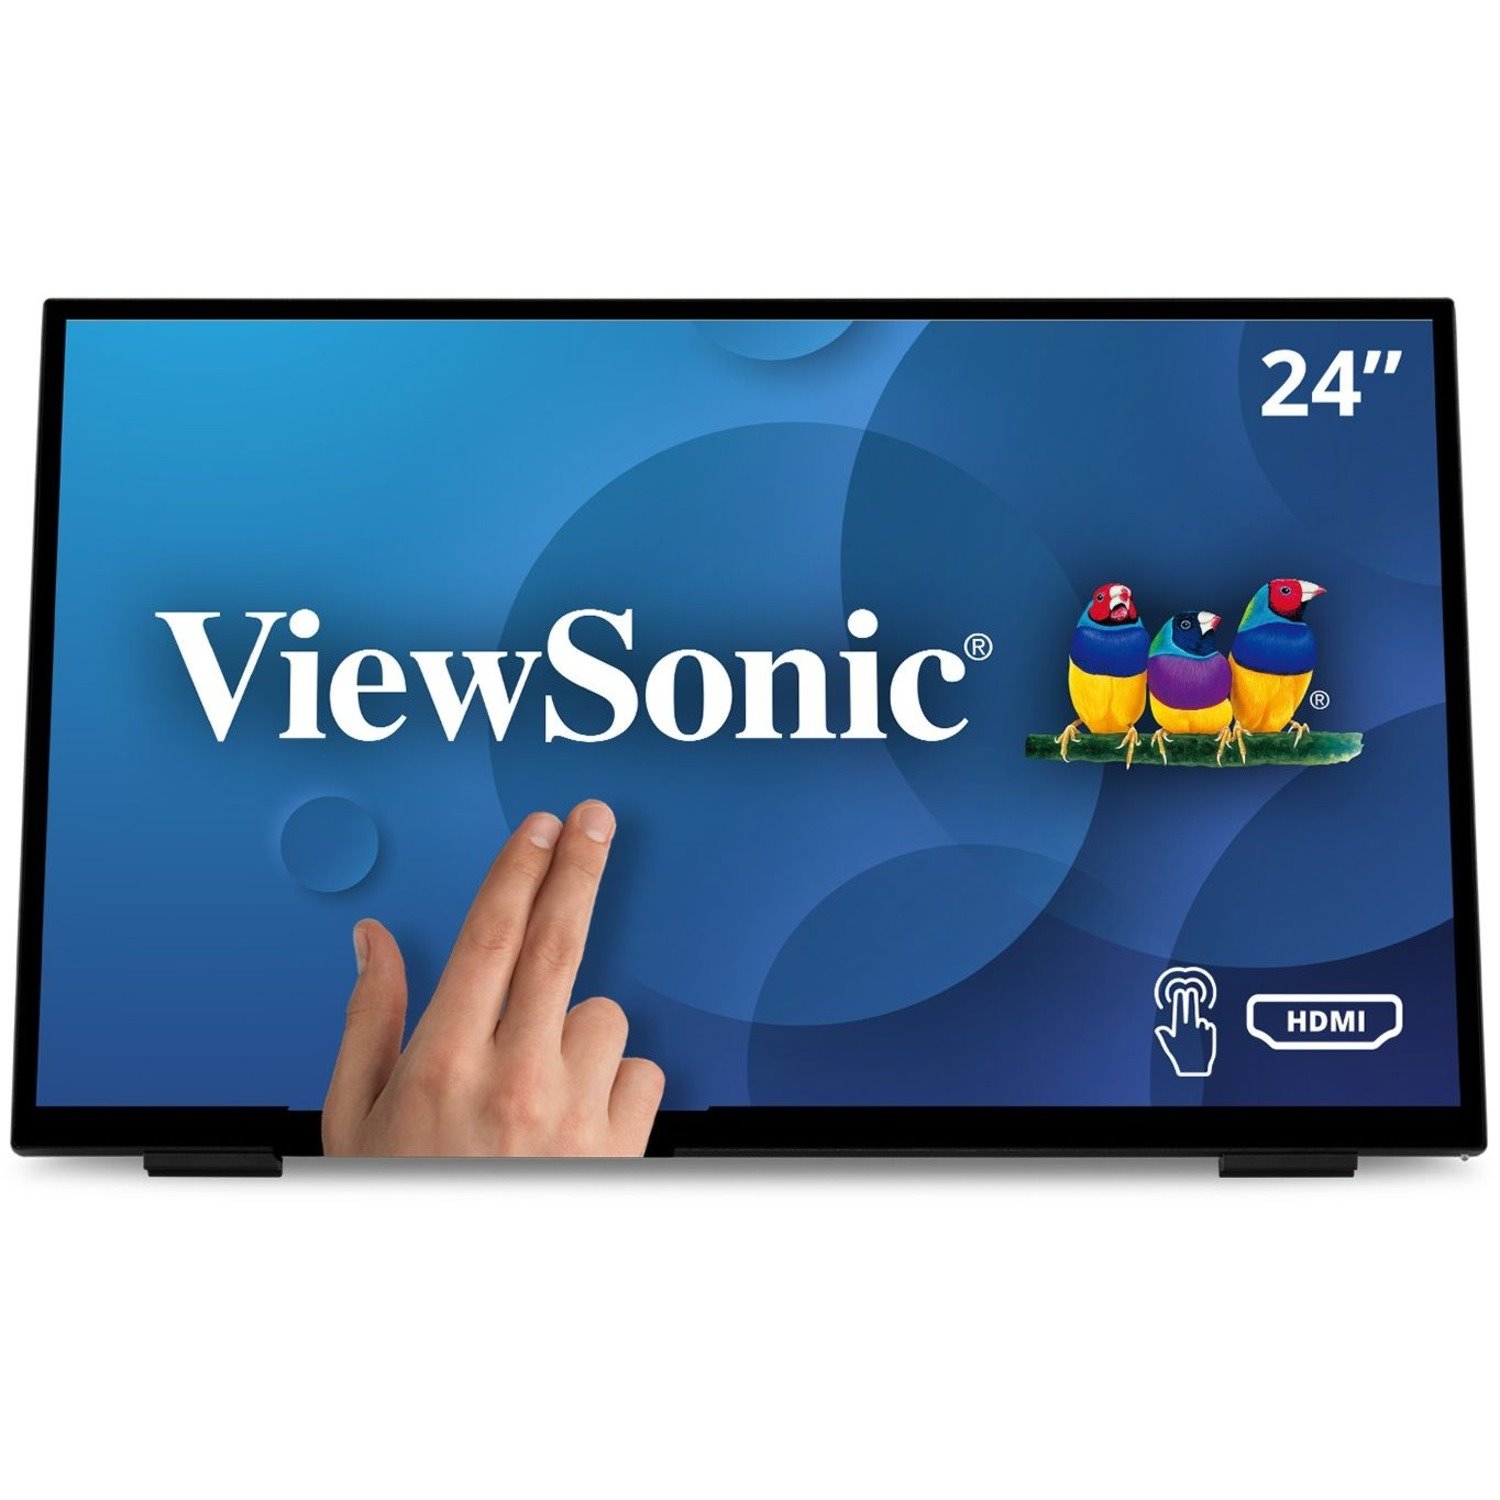 ViewSonic TD2465 24" Class LCD Touchscreen Monitor - 16:9 - 7 ms